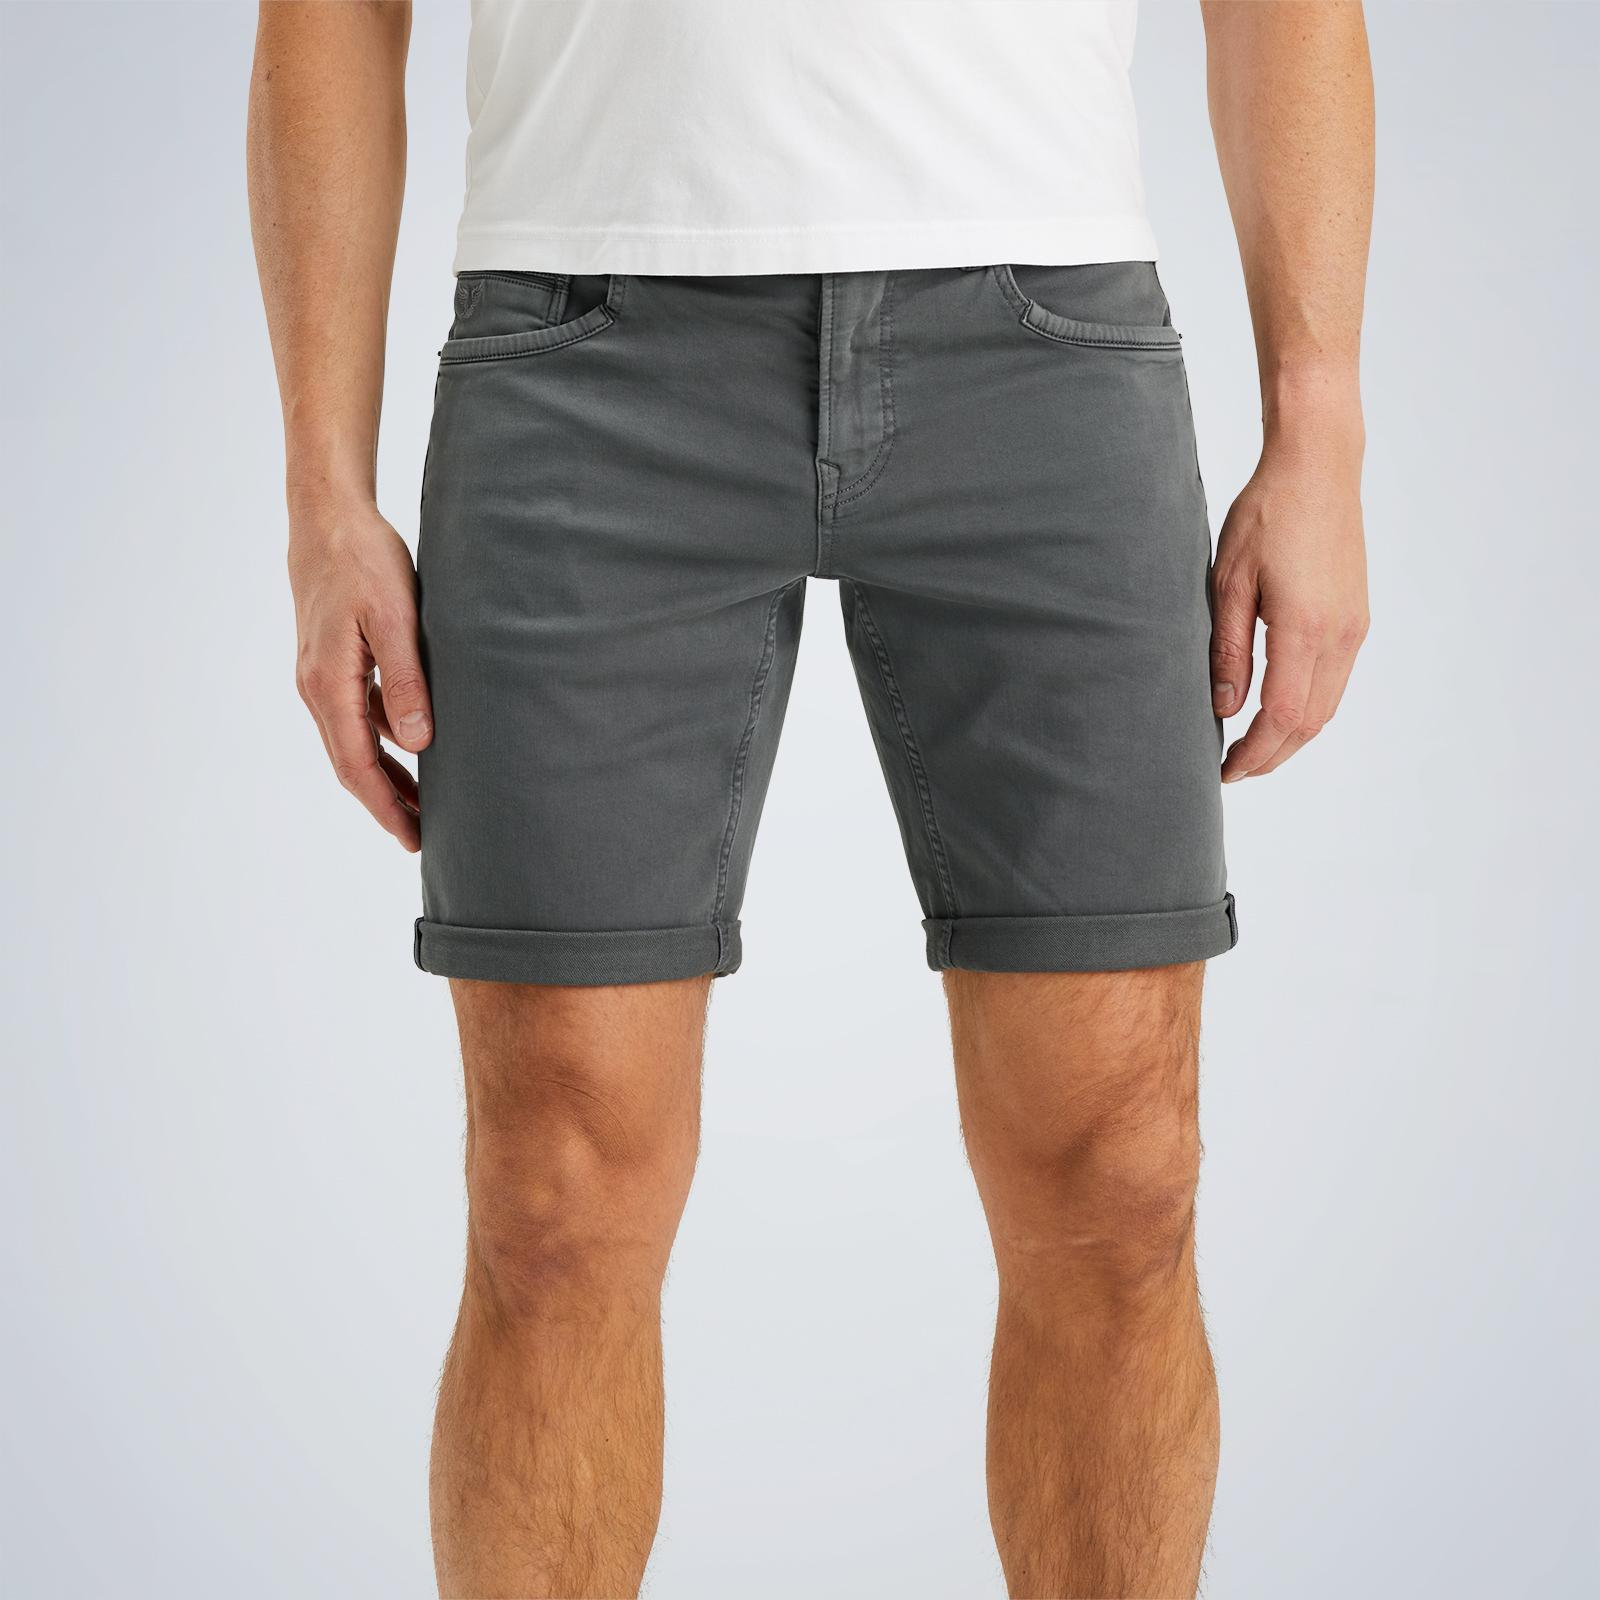 PME Legend Tailwheel shorts